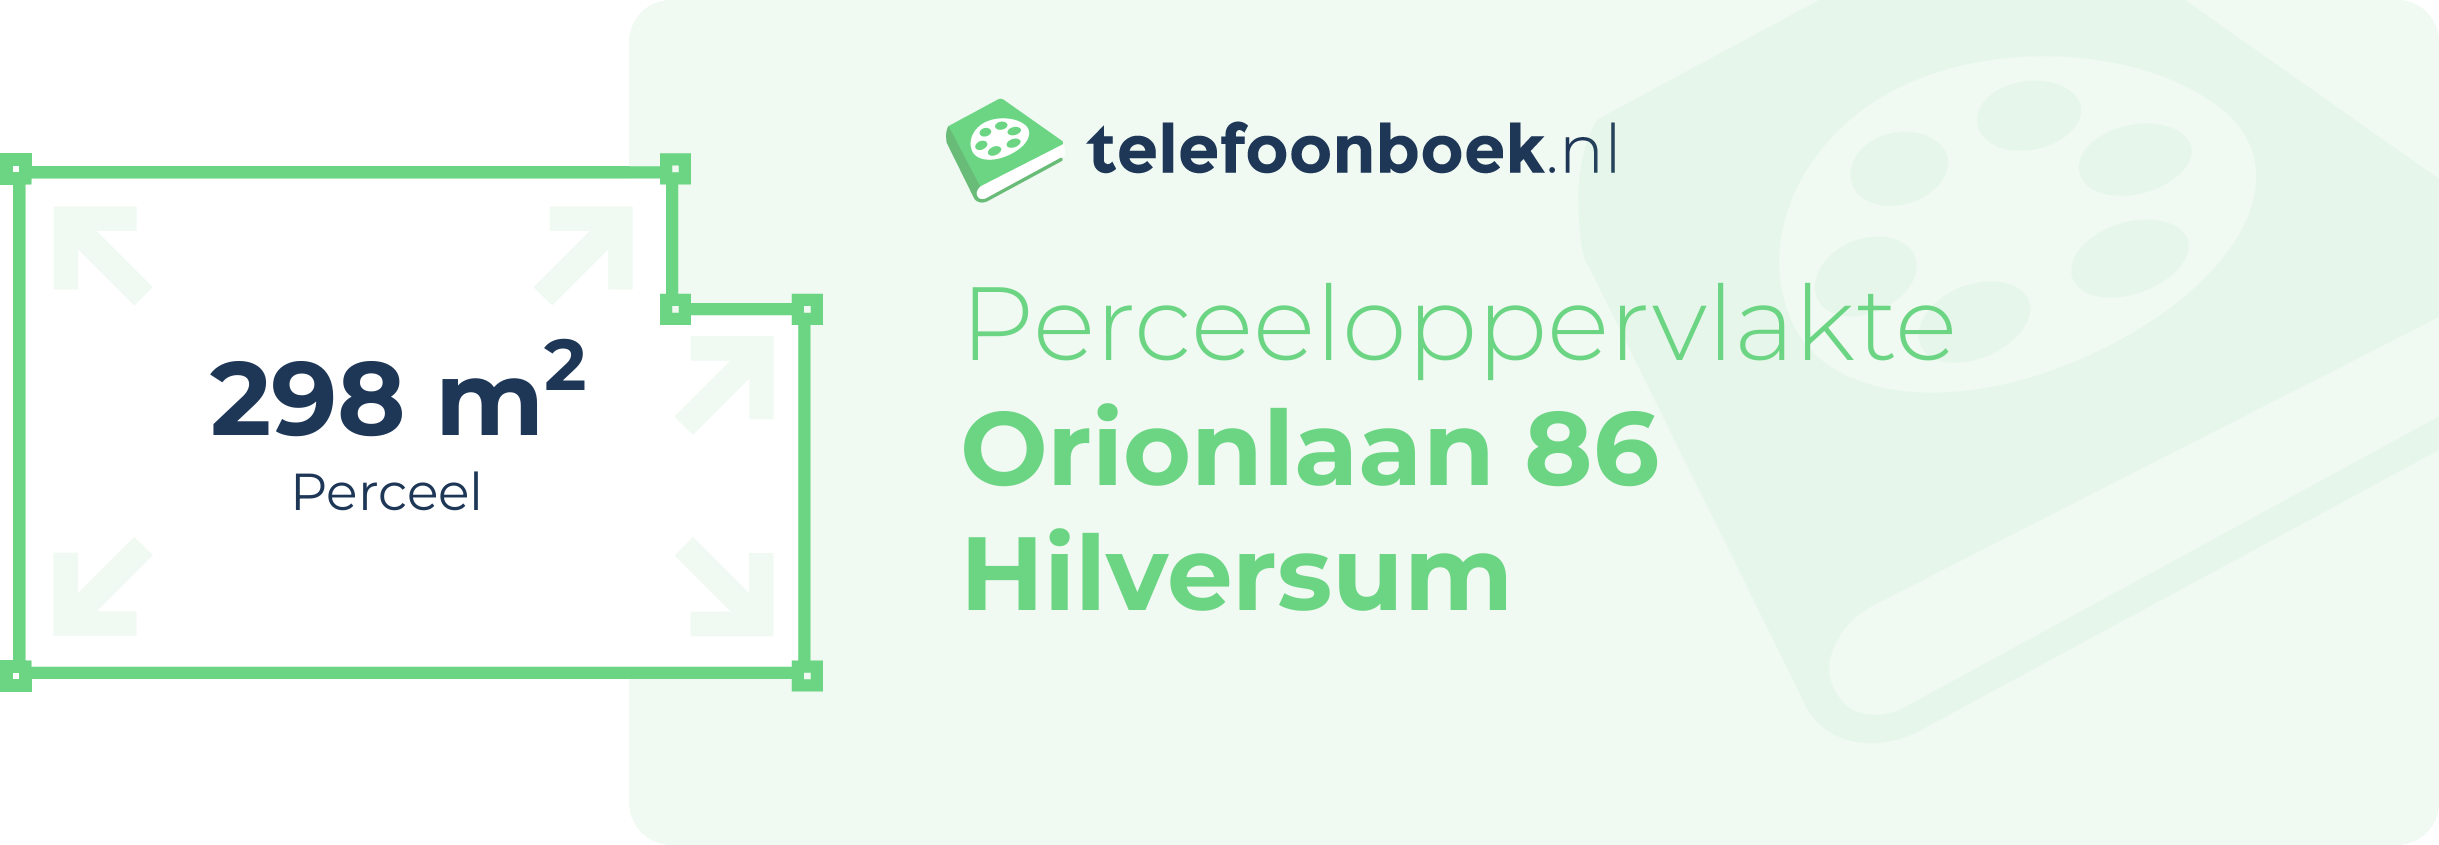 Perceeloppervlakte Orionlaan 86 Hilversum